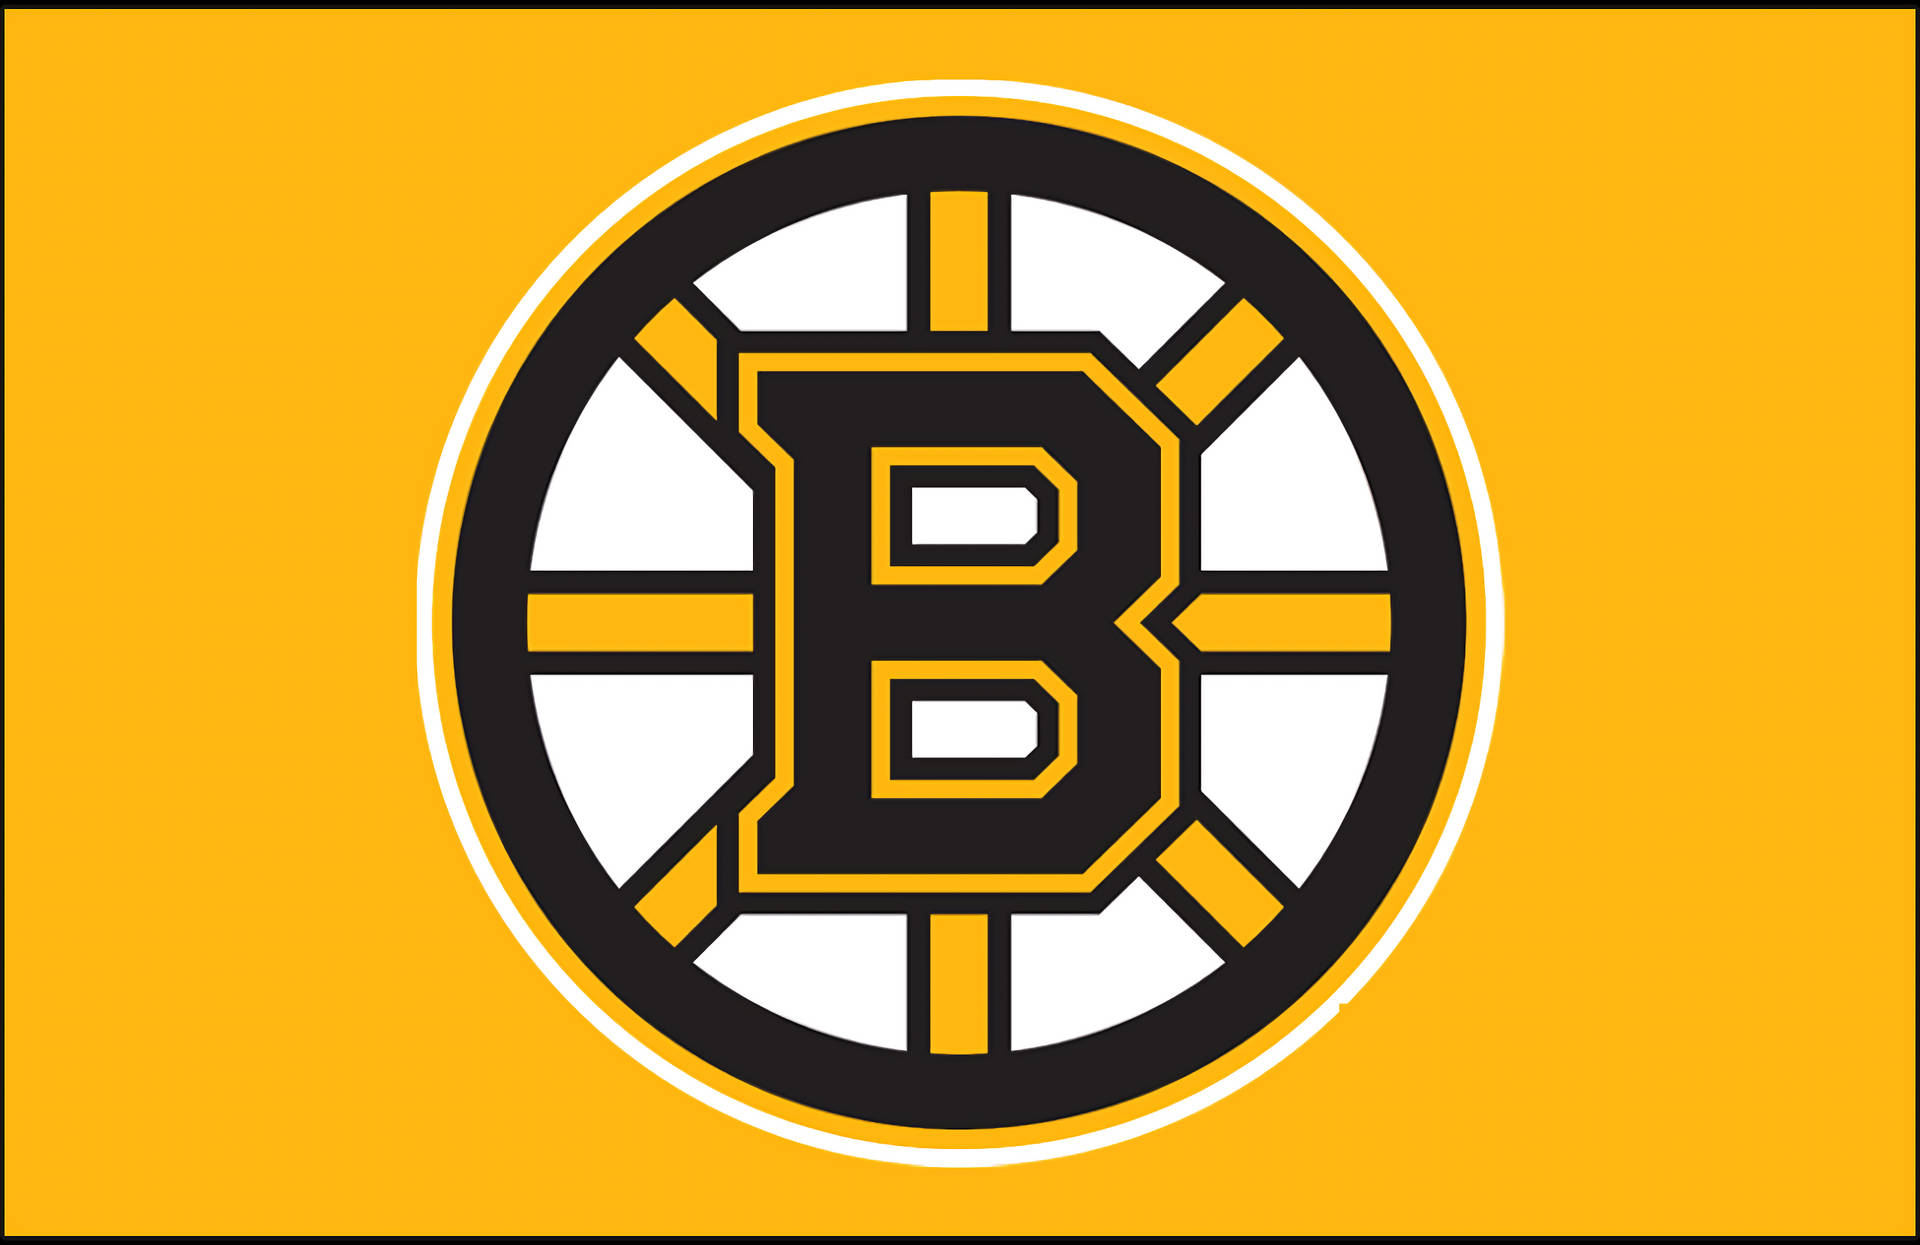 Boston Bruins Iconic Logo On A Yellow Background